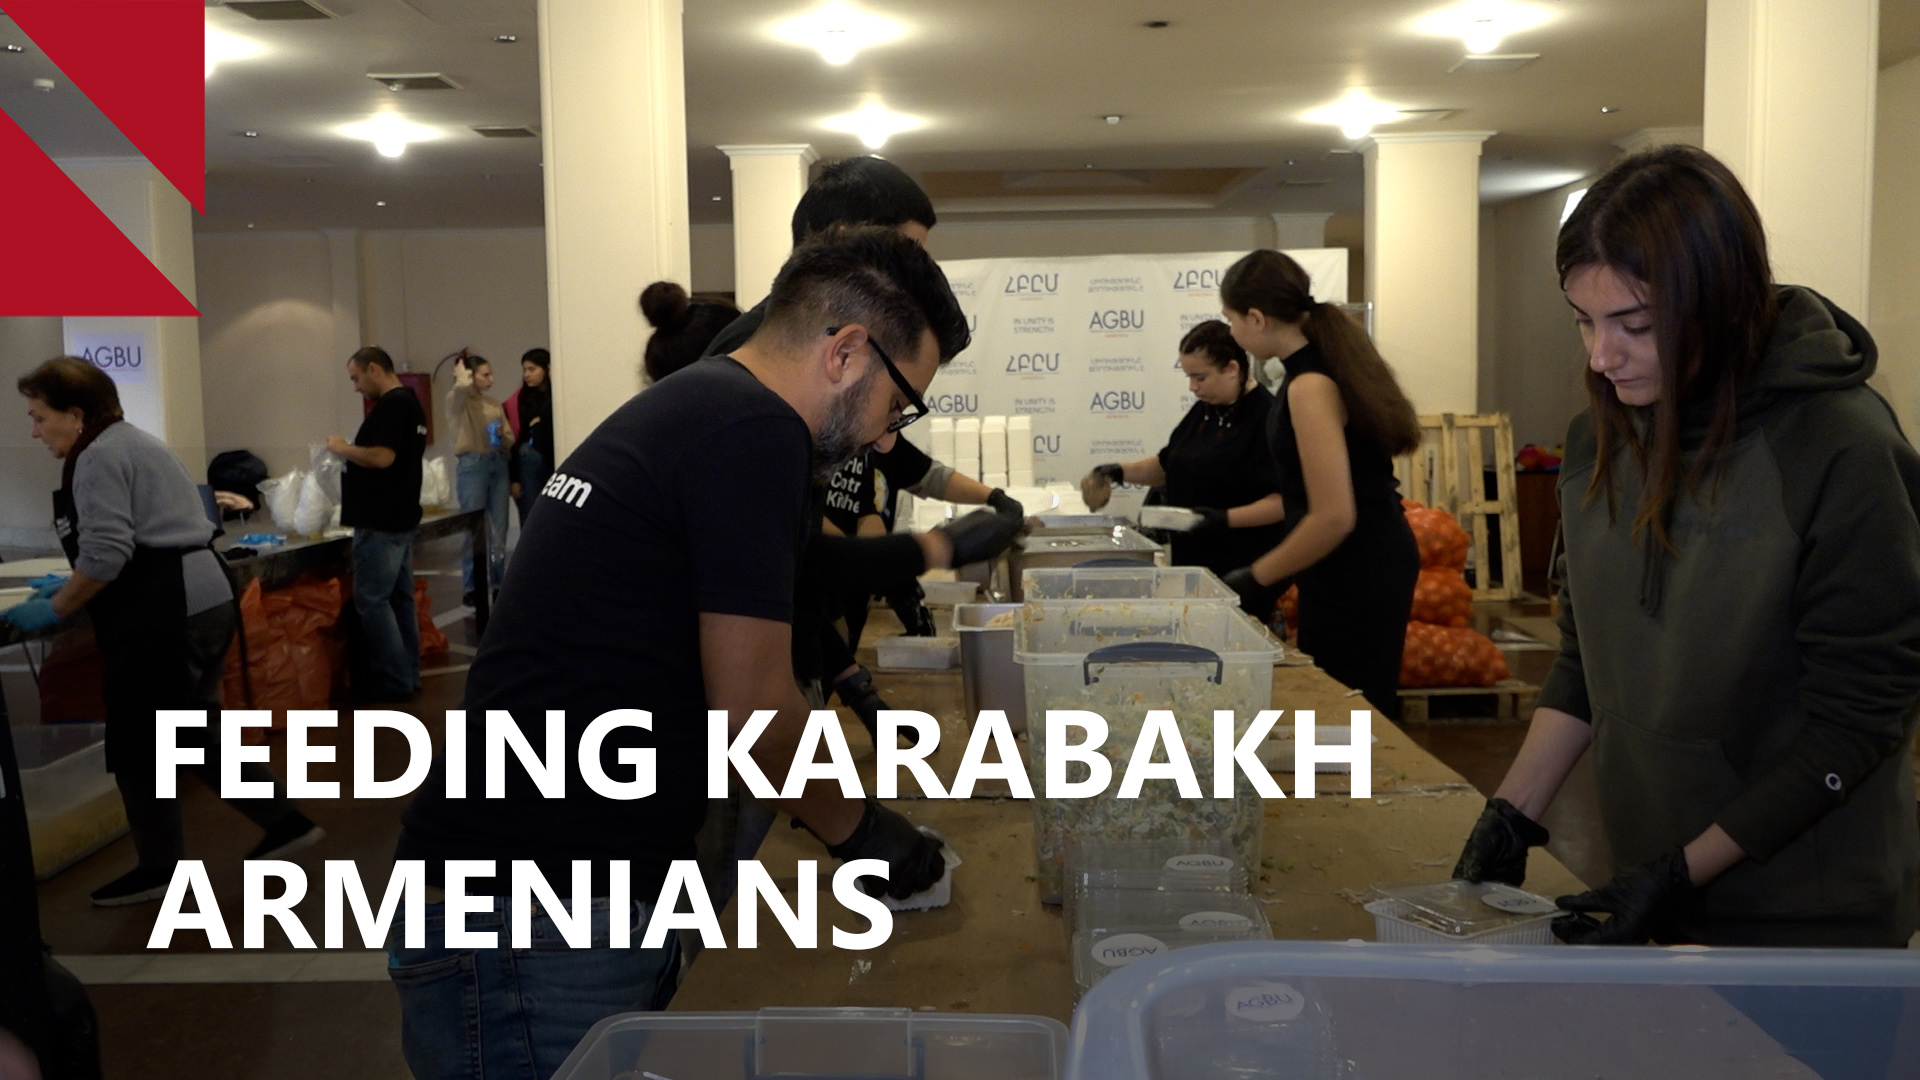 World Central Kitchen provides meals to forcibly displaced Karabakh Armenians